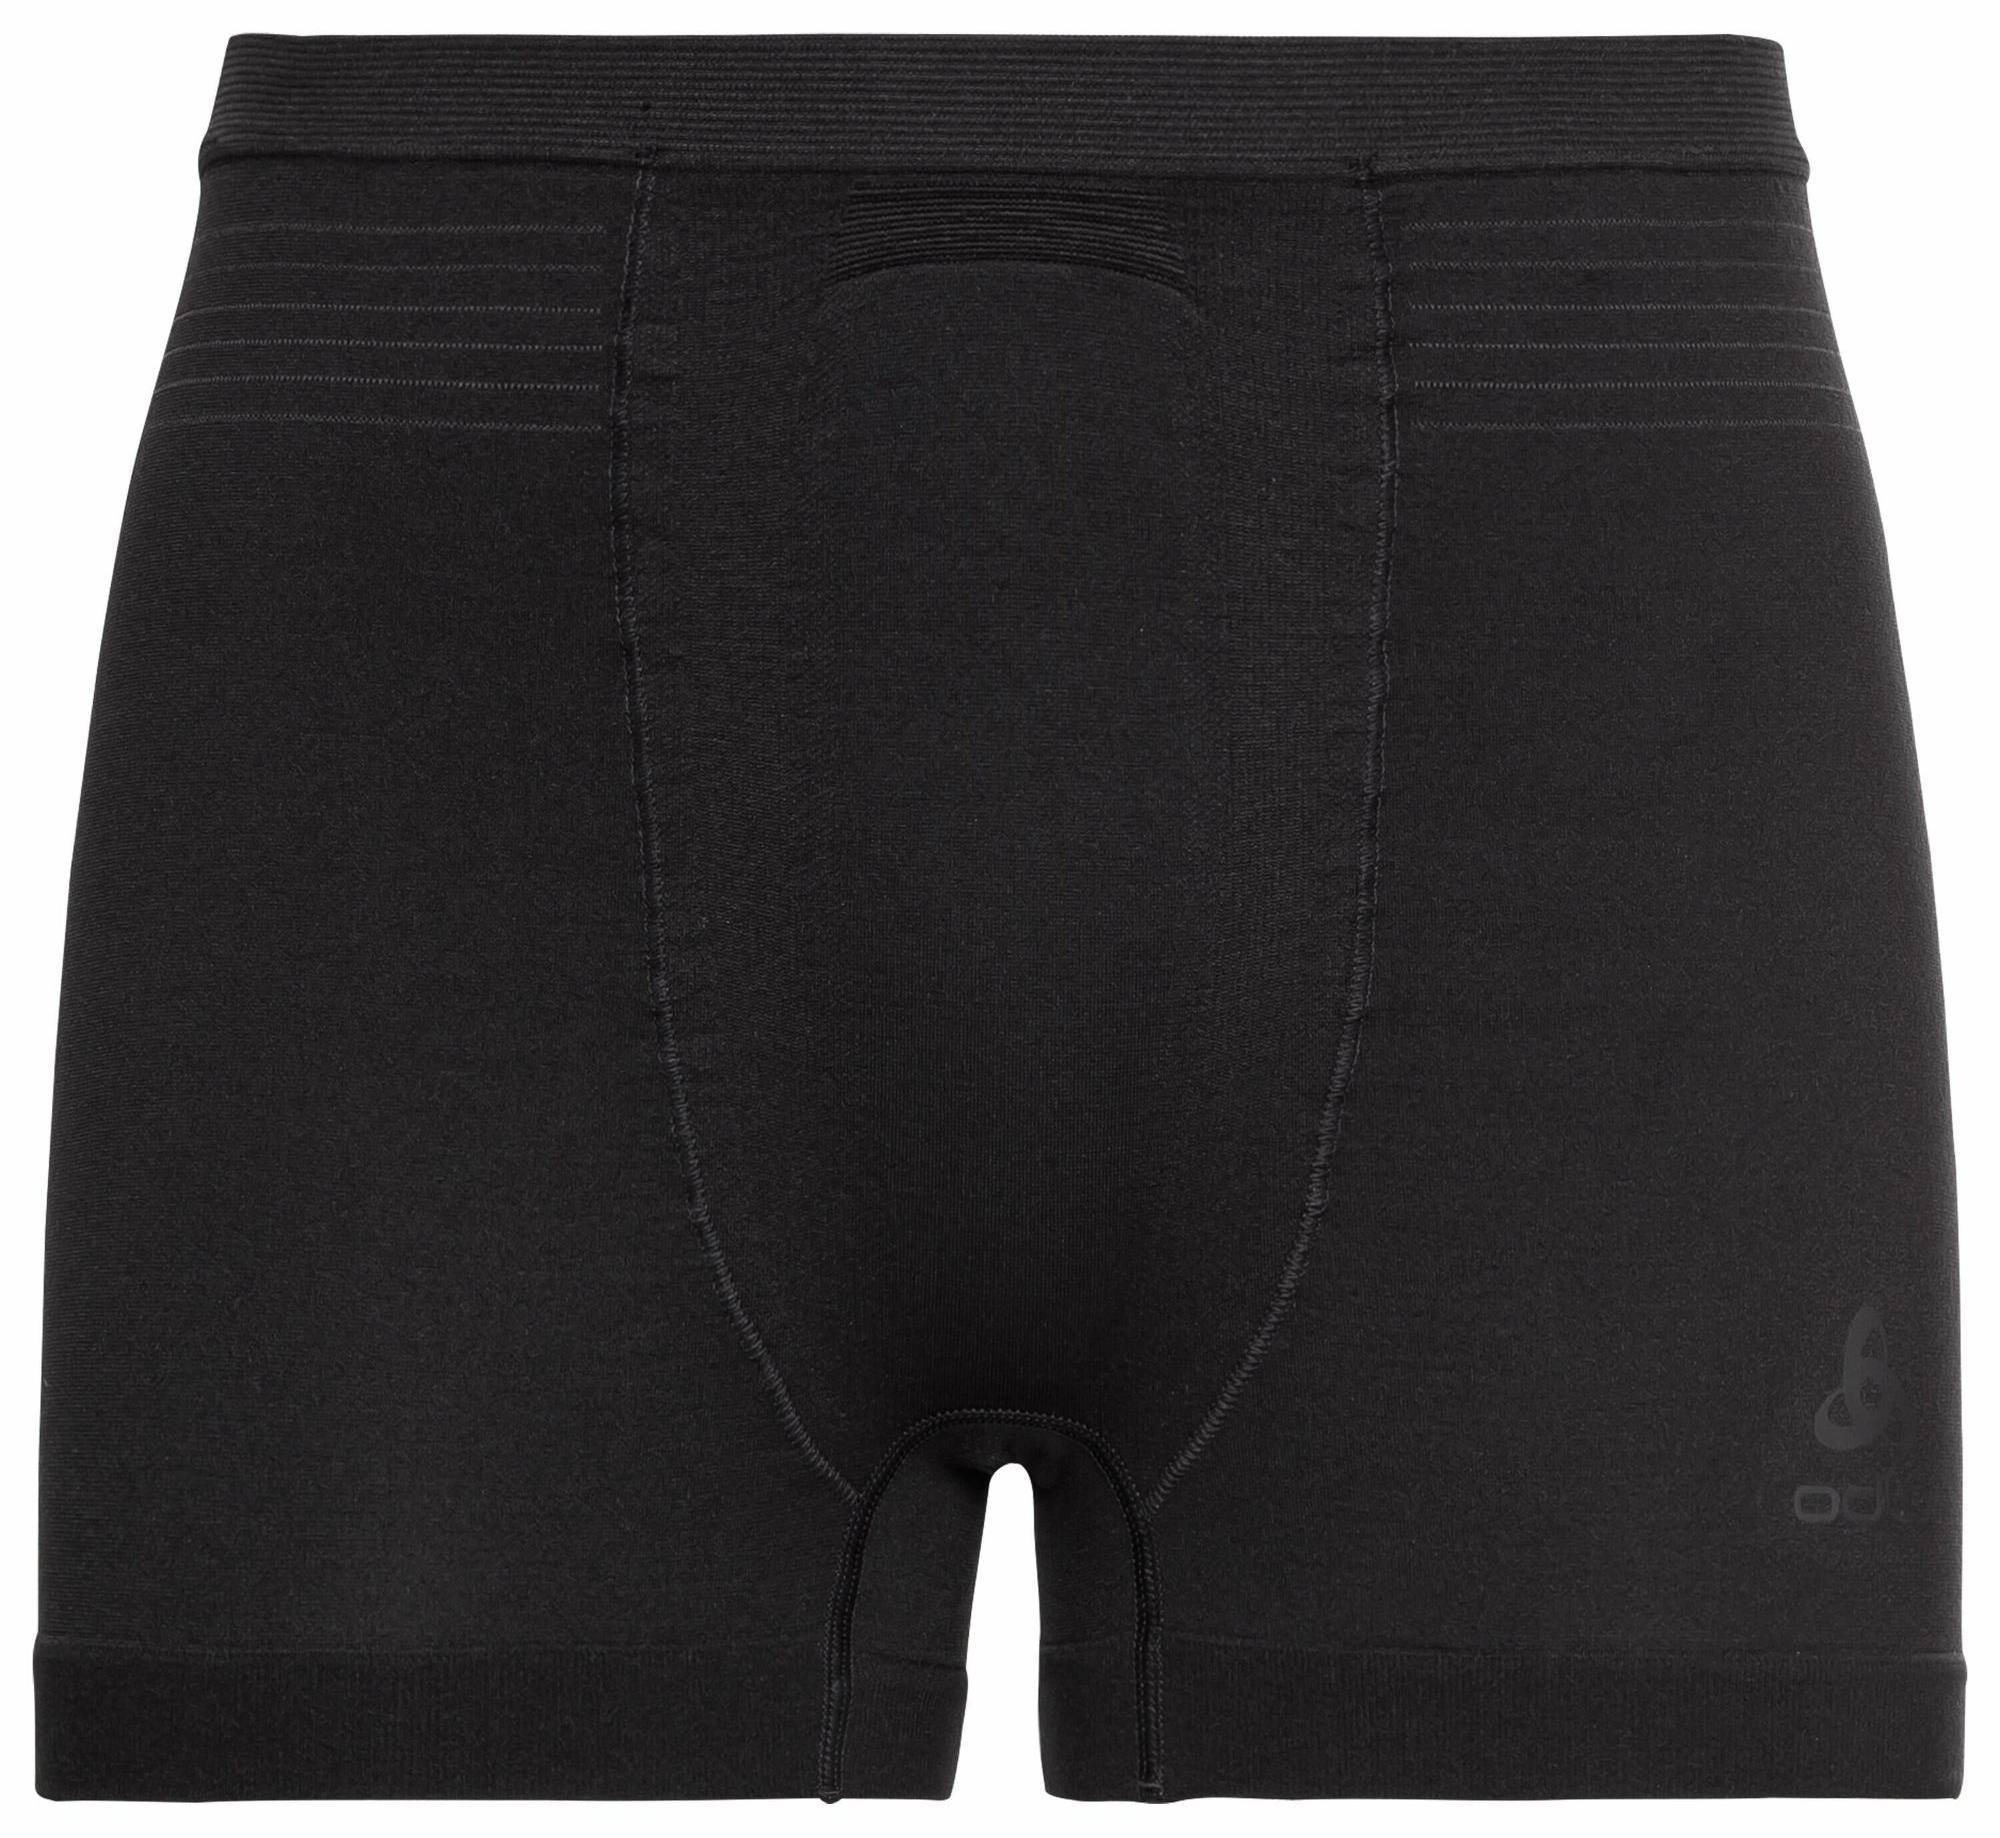 Men’s Performance Light Sports Underwear Boxers Black XL